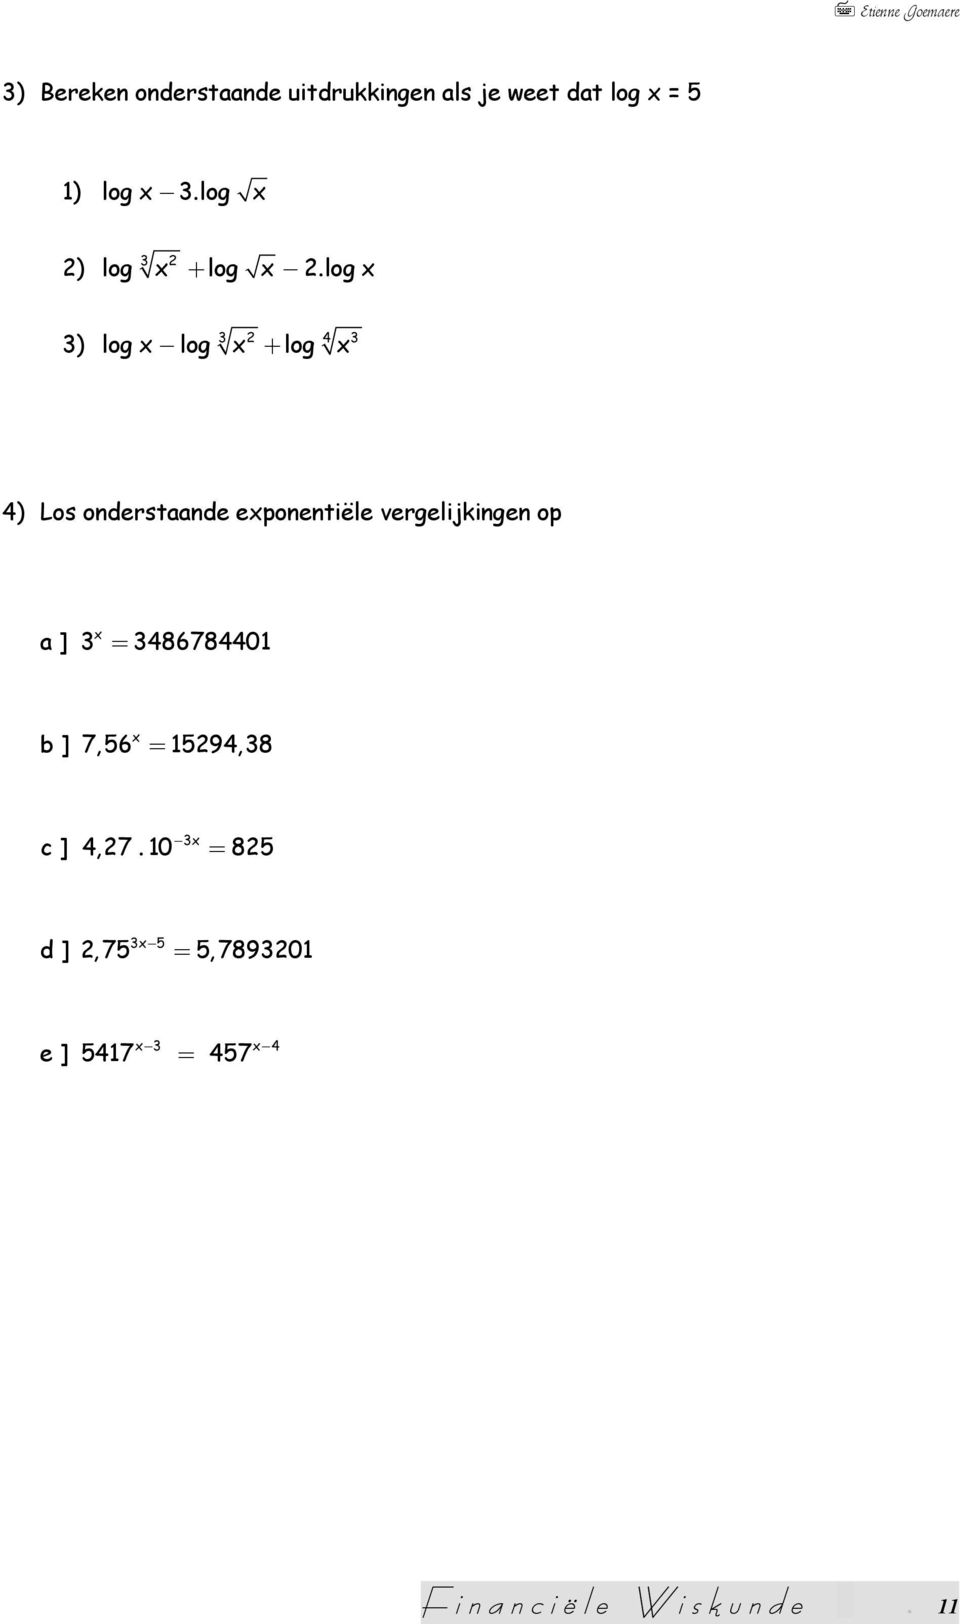 log x 3) log x log x + log x 3 2 4 3 4) Los oderstaade expoetiële vergelijkige